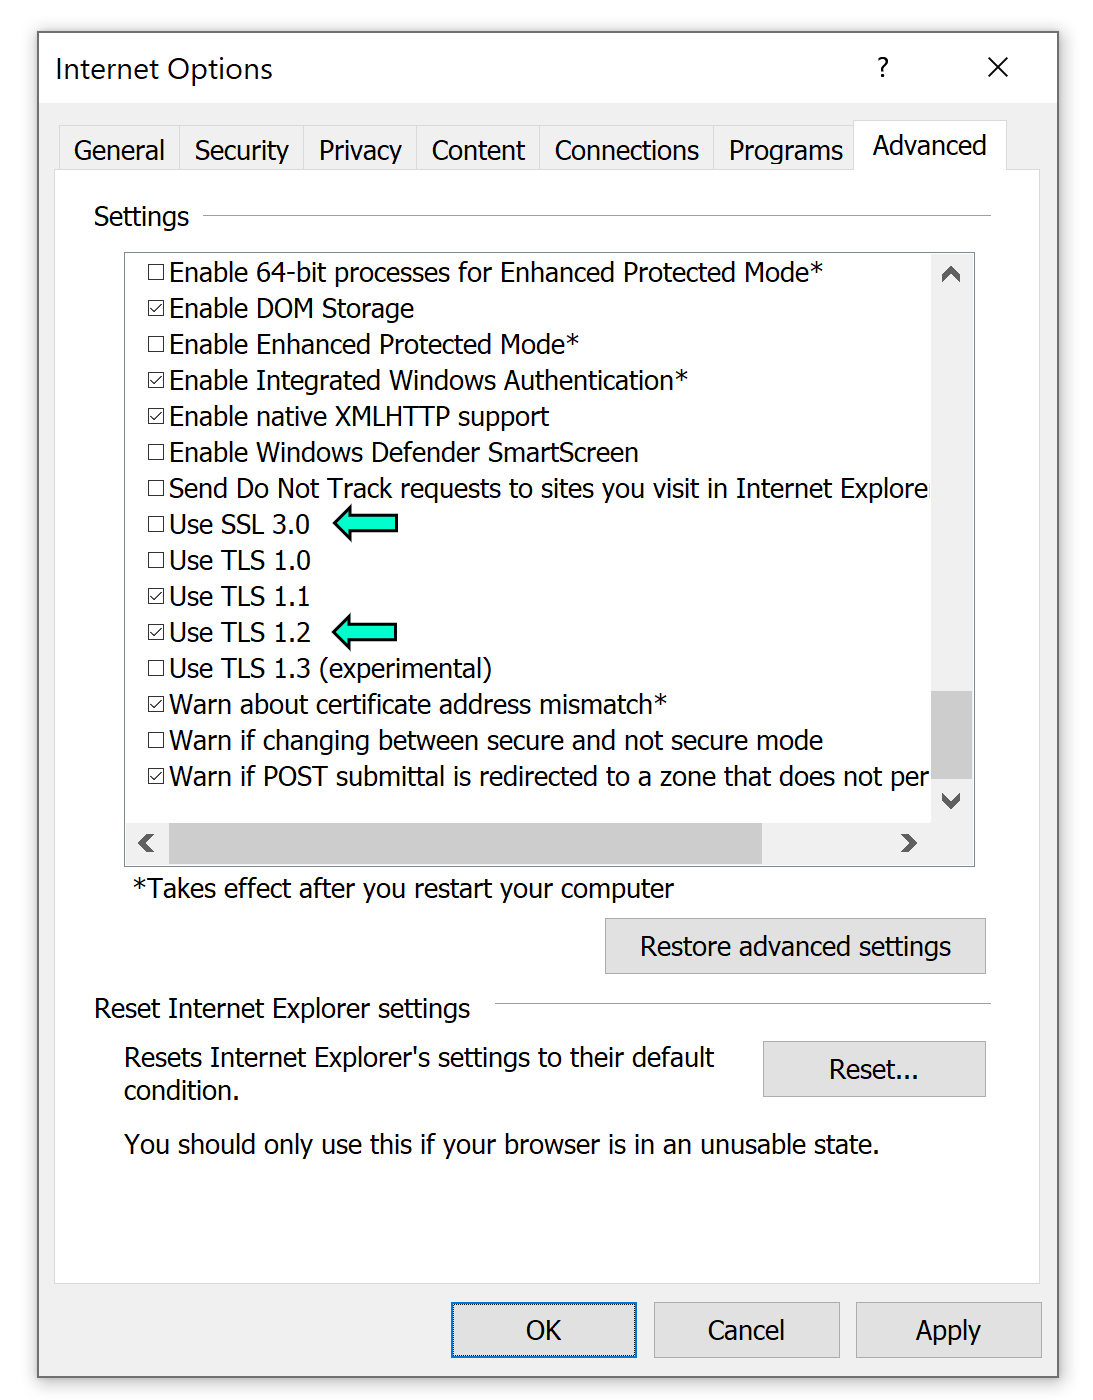 Screenshot of the Internet Options settings menu within Windows